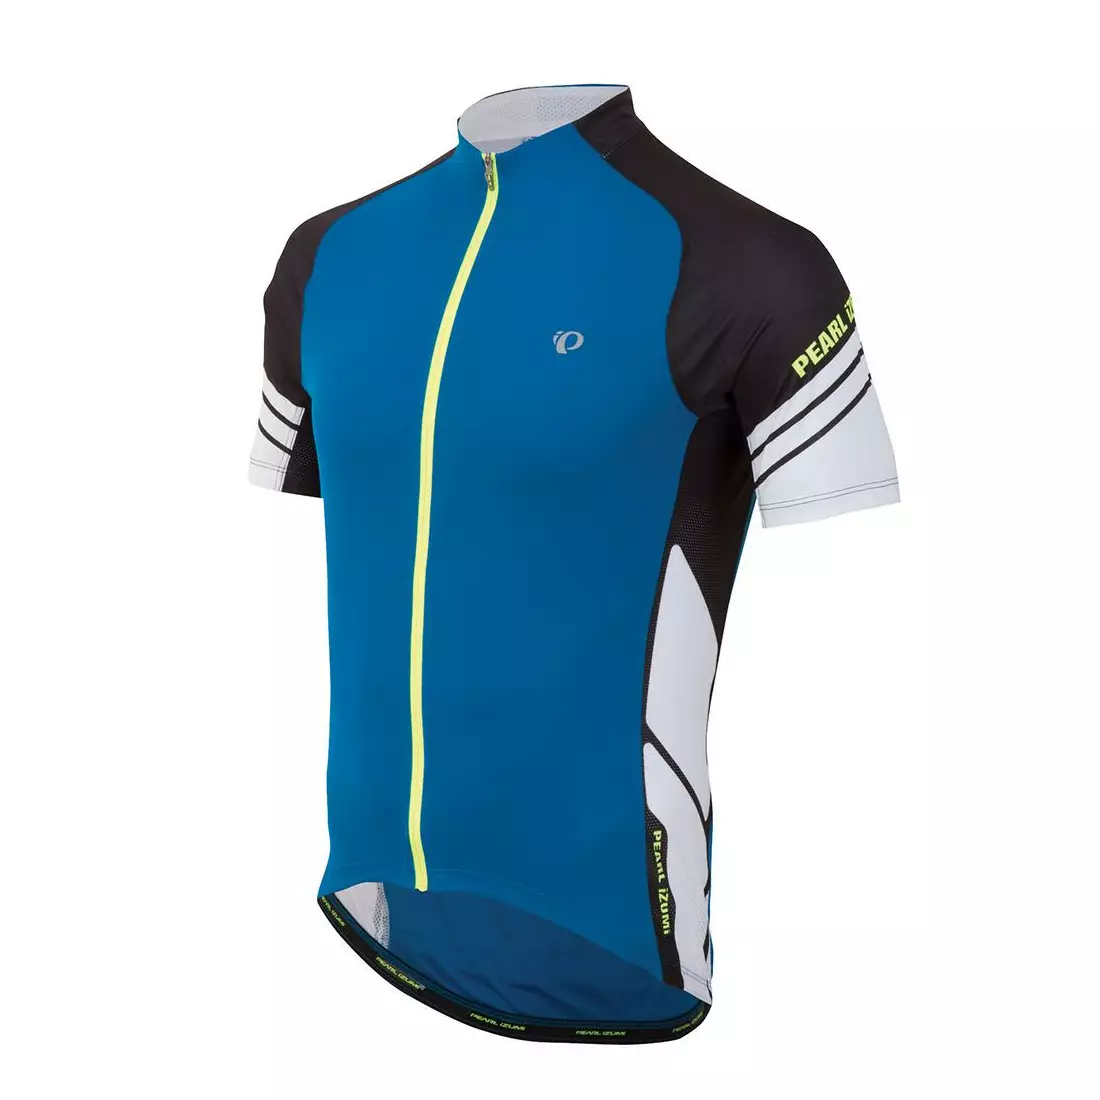 PEARL IZUMI - ELITE 11121301-4EM - světlý cyklistický dres, barva: Modro-černá